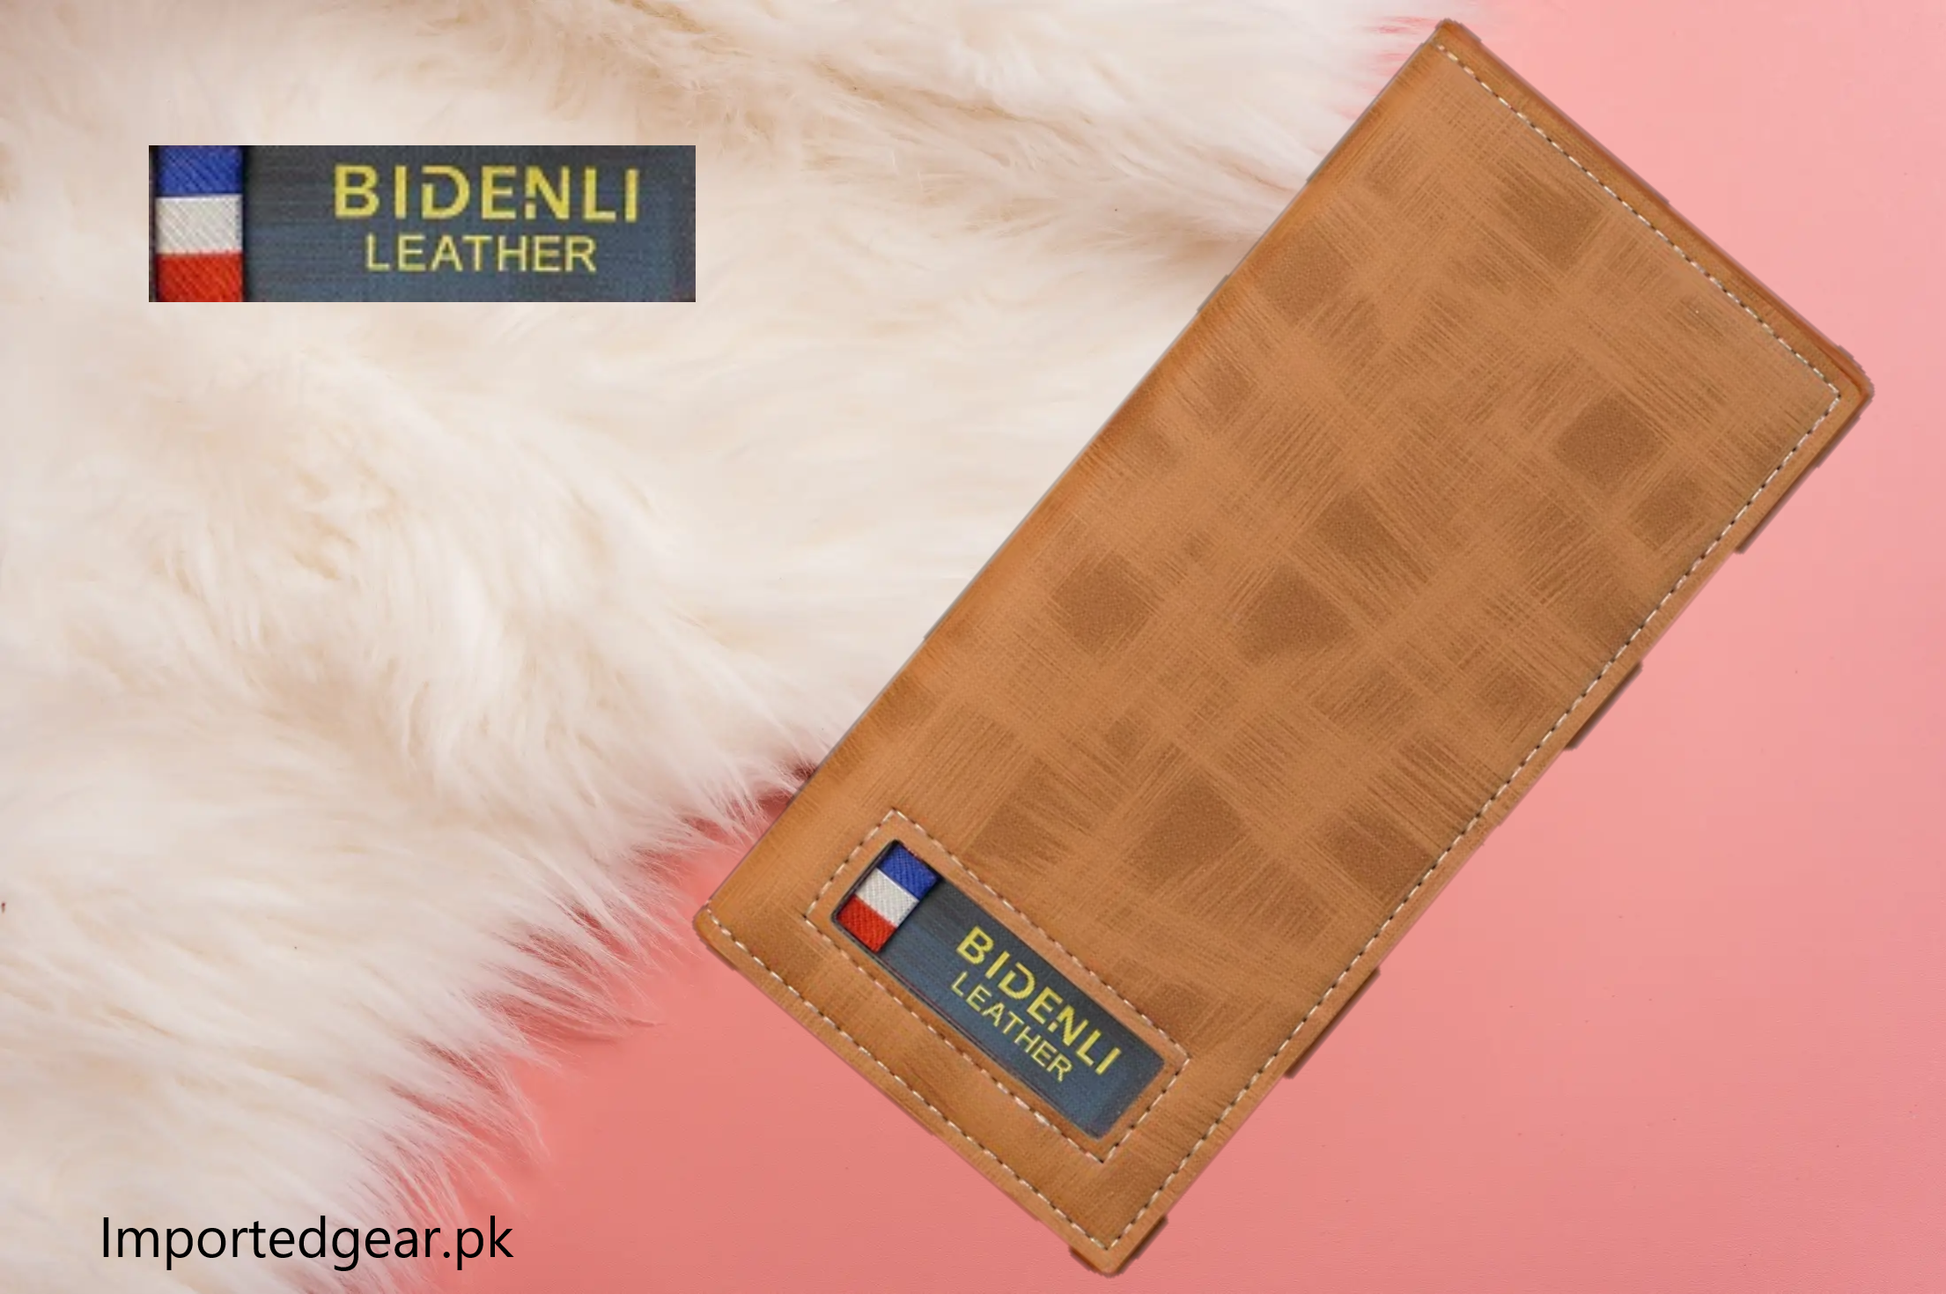 BIDENLI Leather Wallet for Men Women with Card Holder